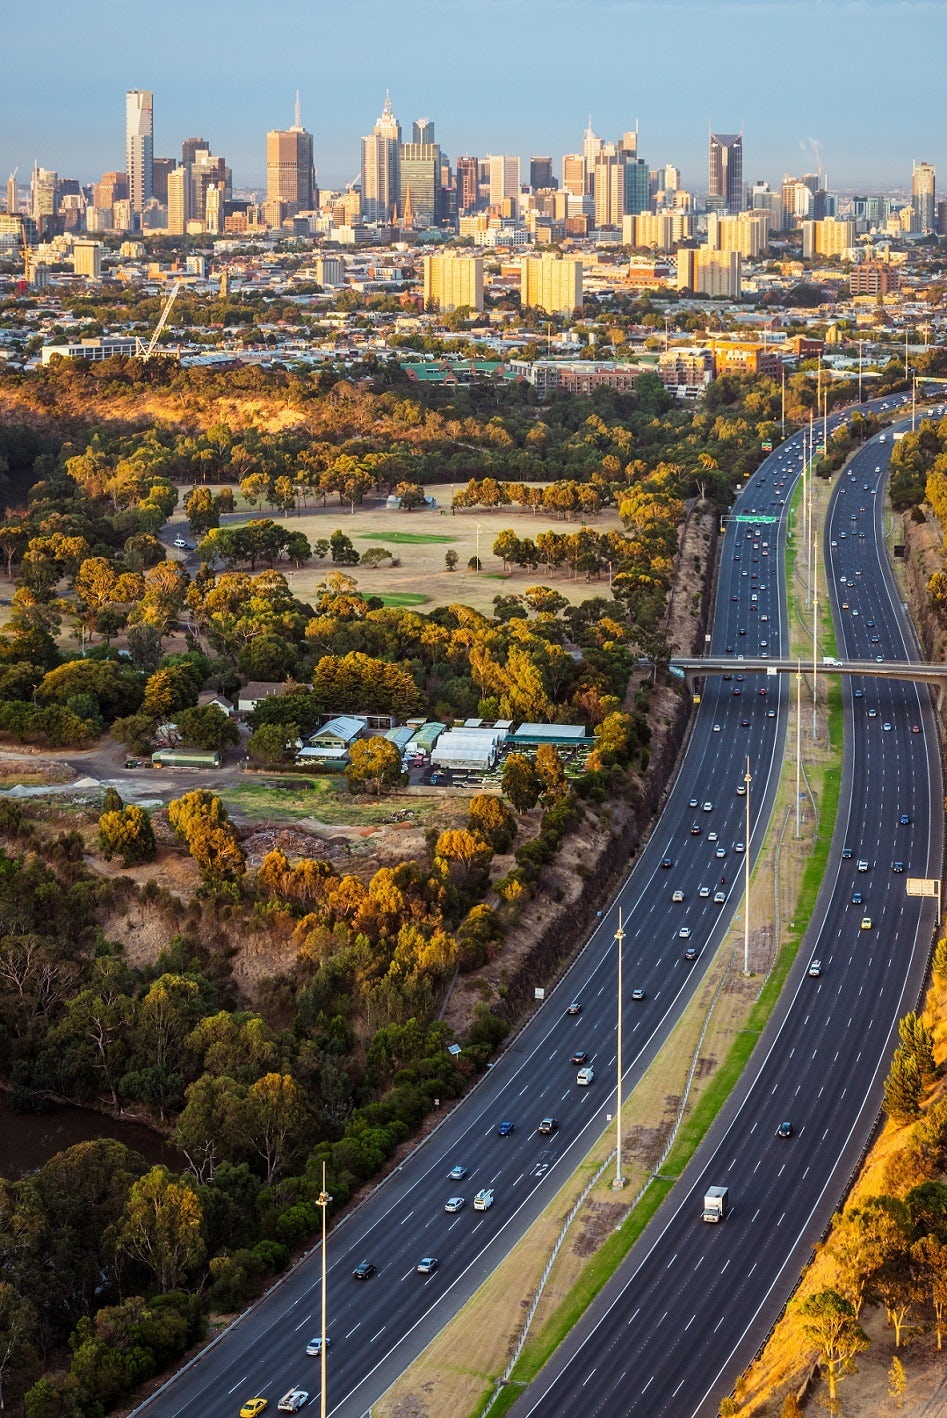 Melbourne skyline wiht freeway in foreground and gardens